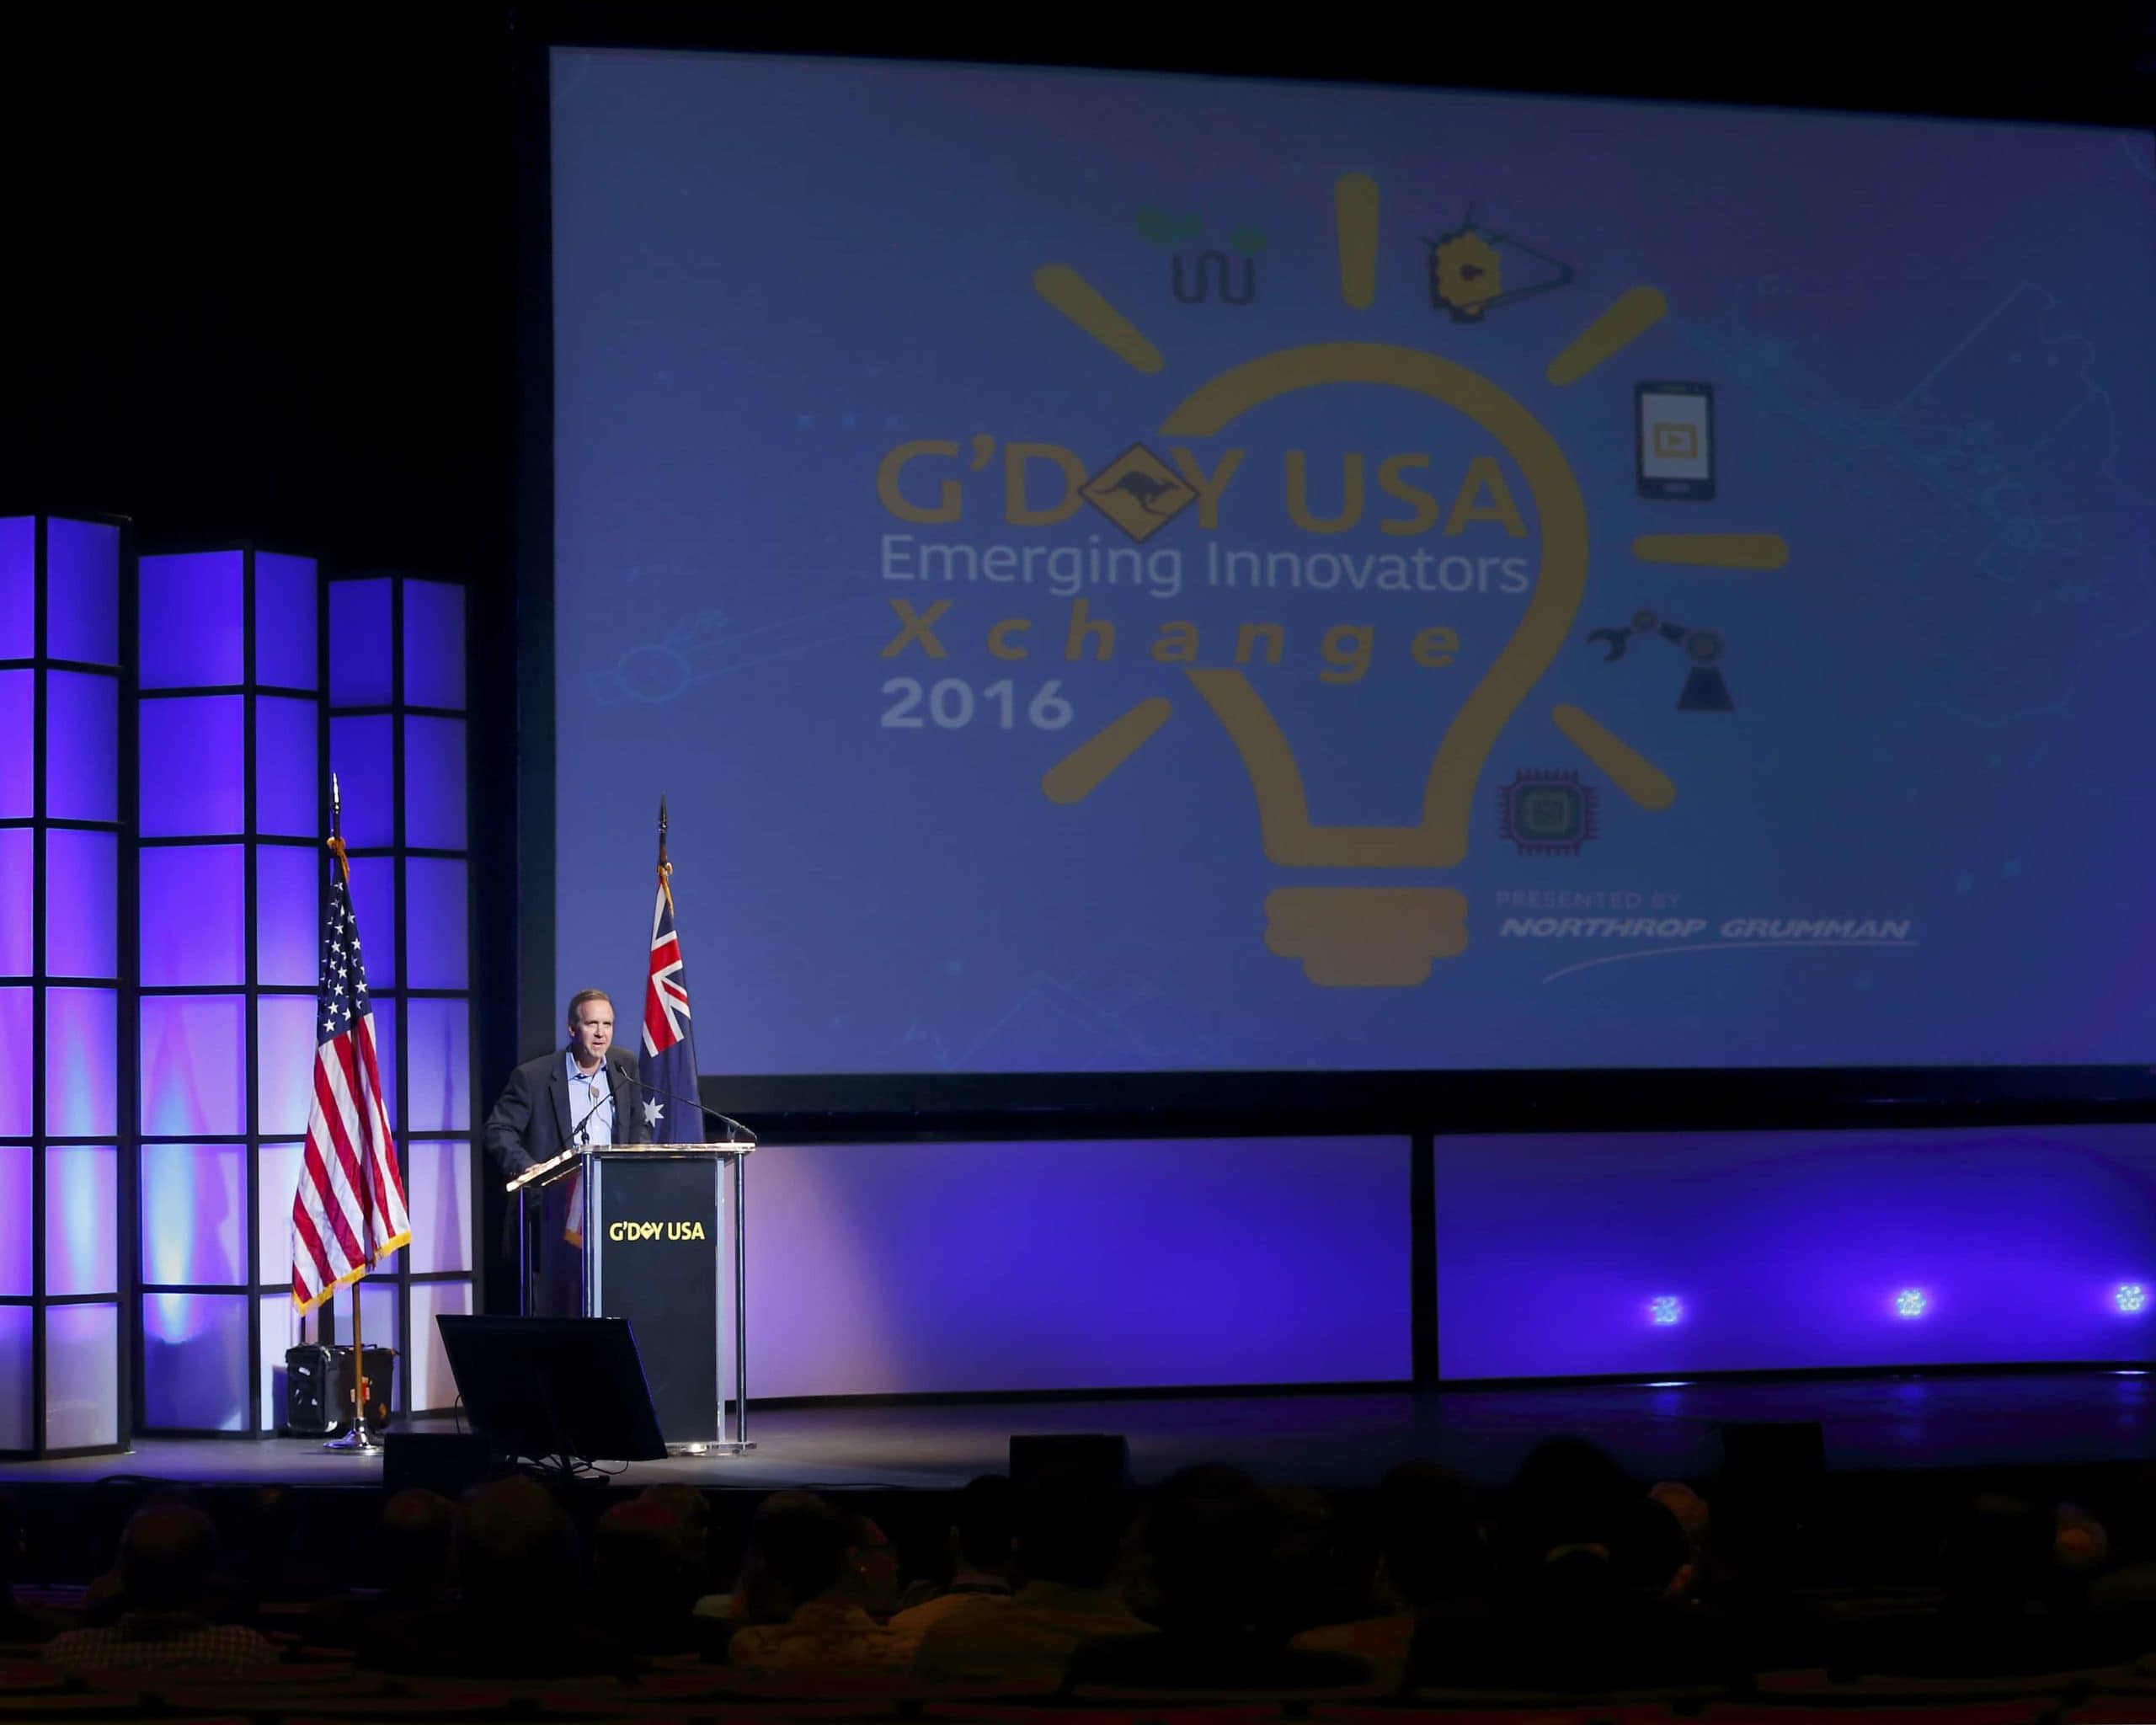 Innovators Xchange 2016 G'Day USA